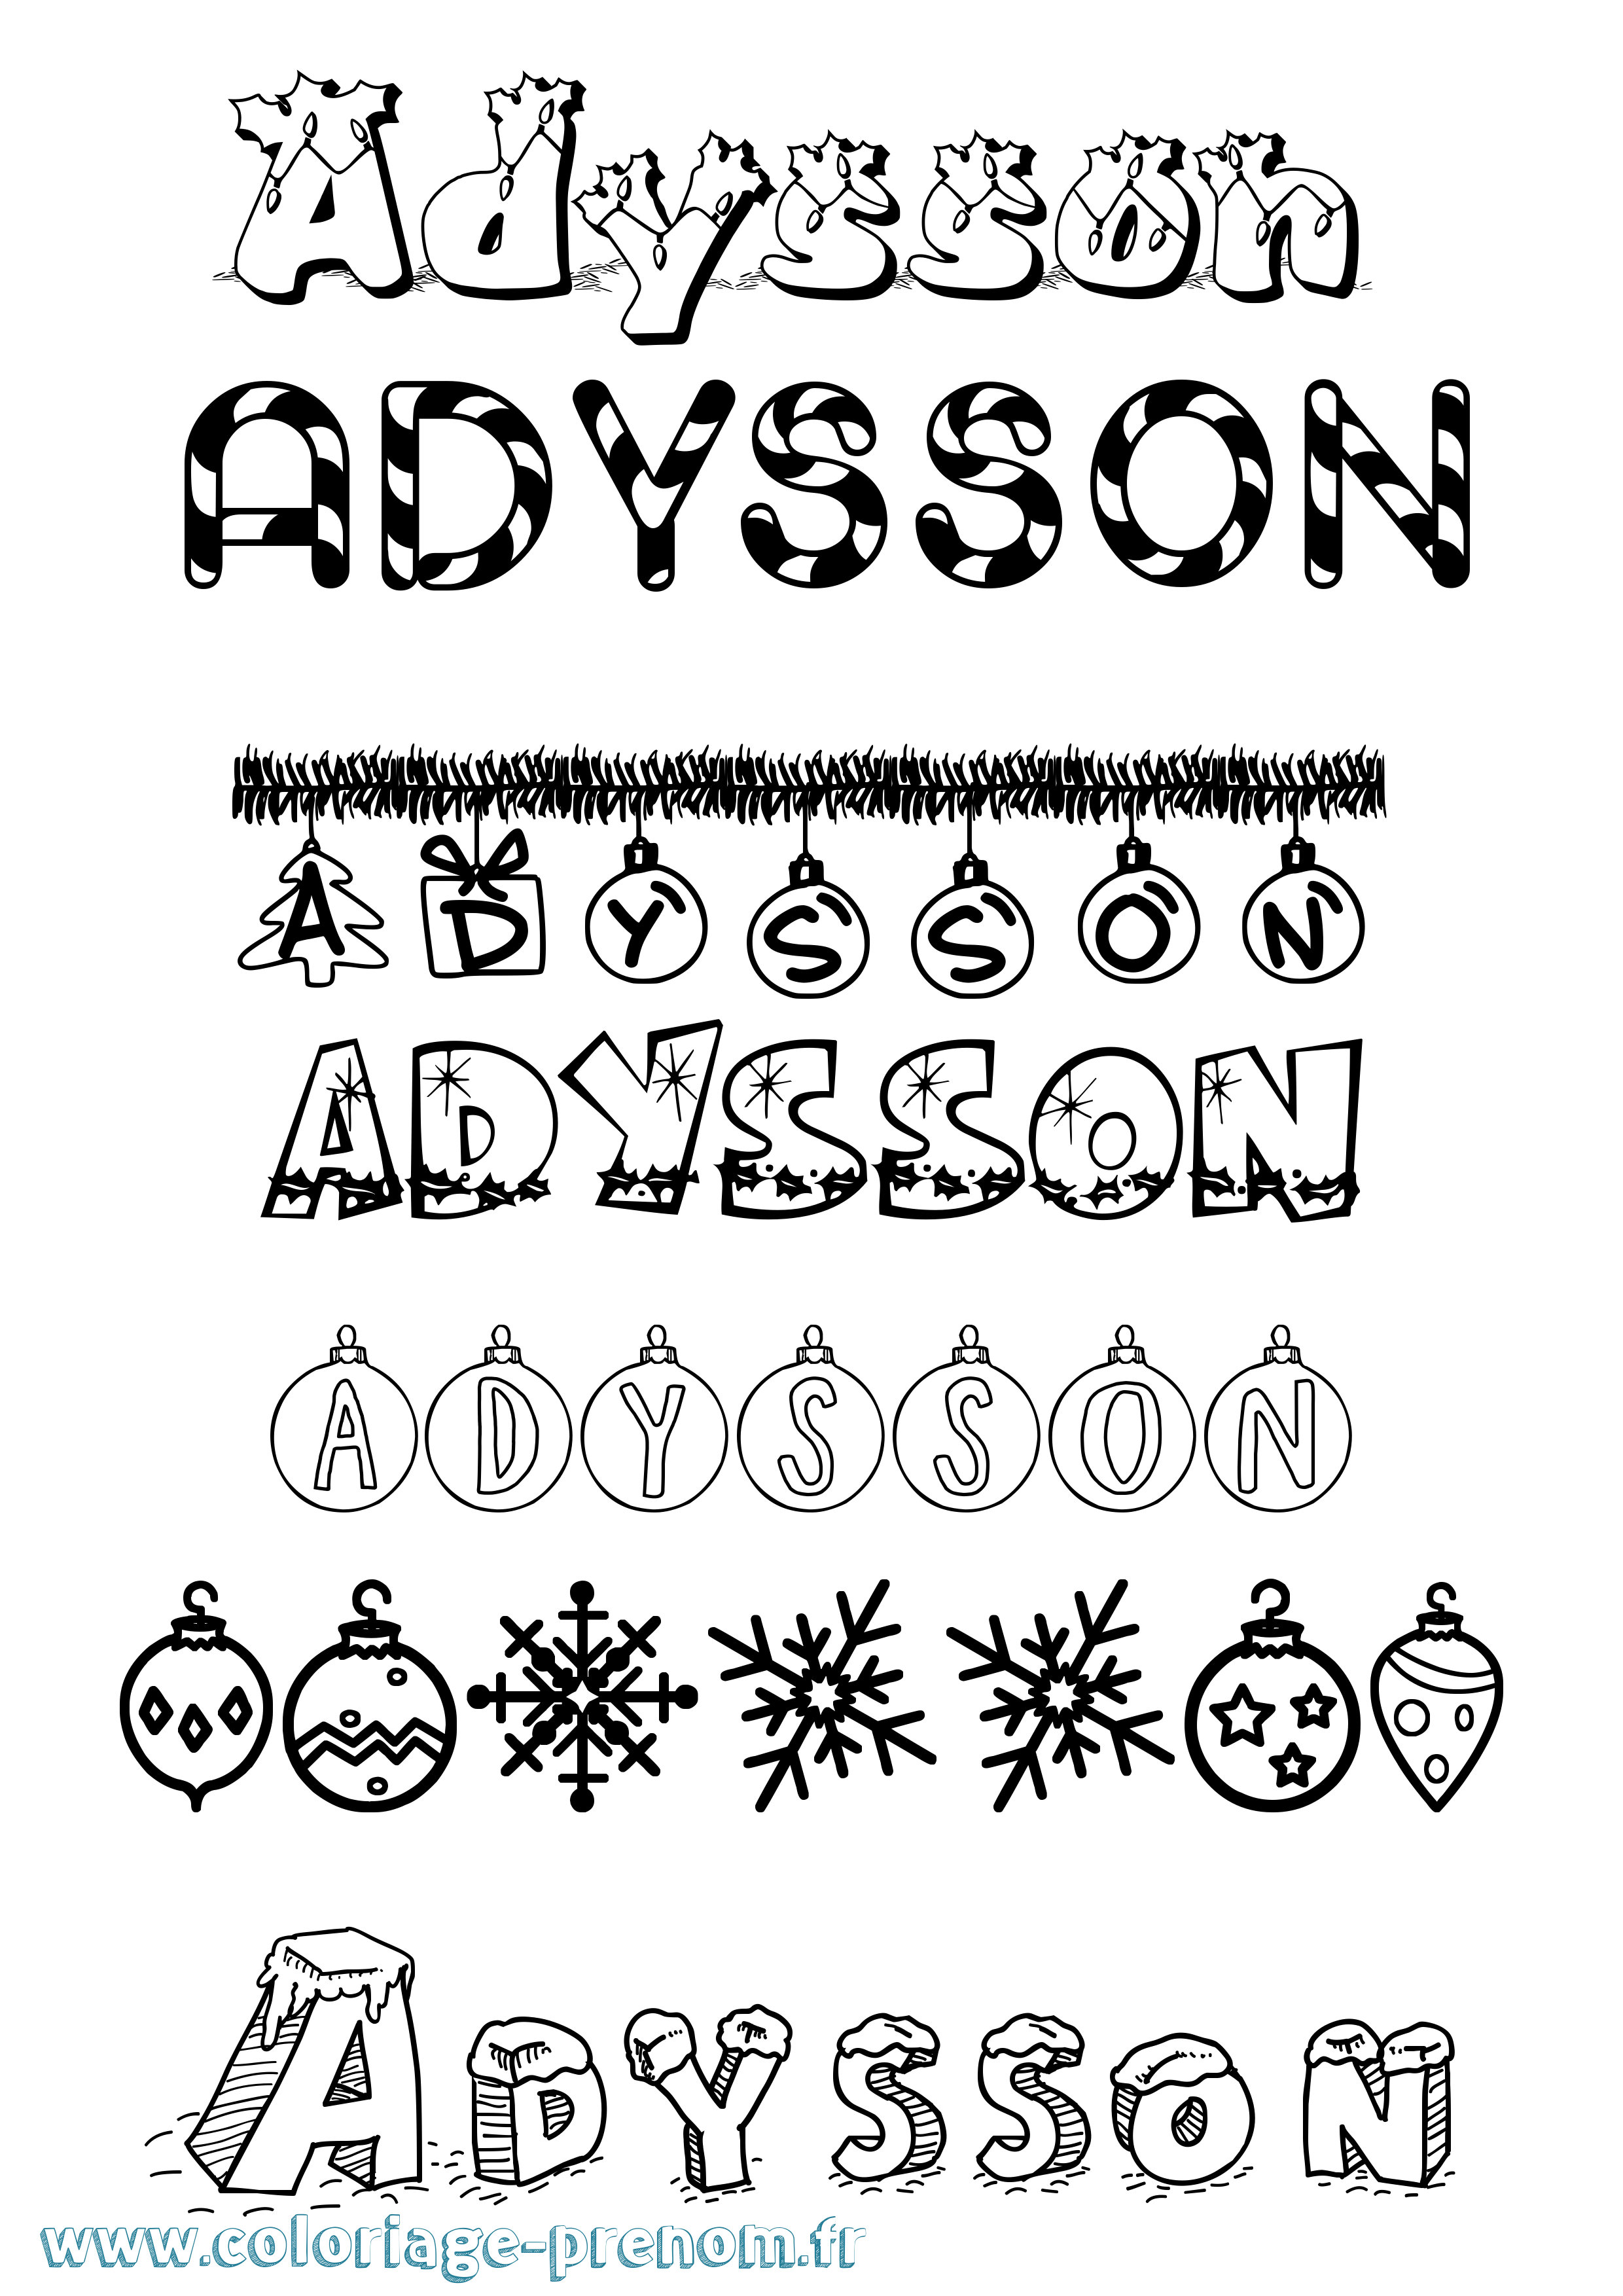 Coloriage prénom Adysson Noël